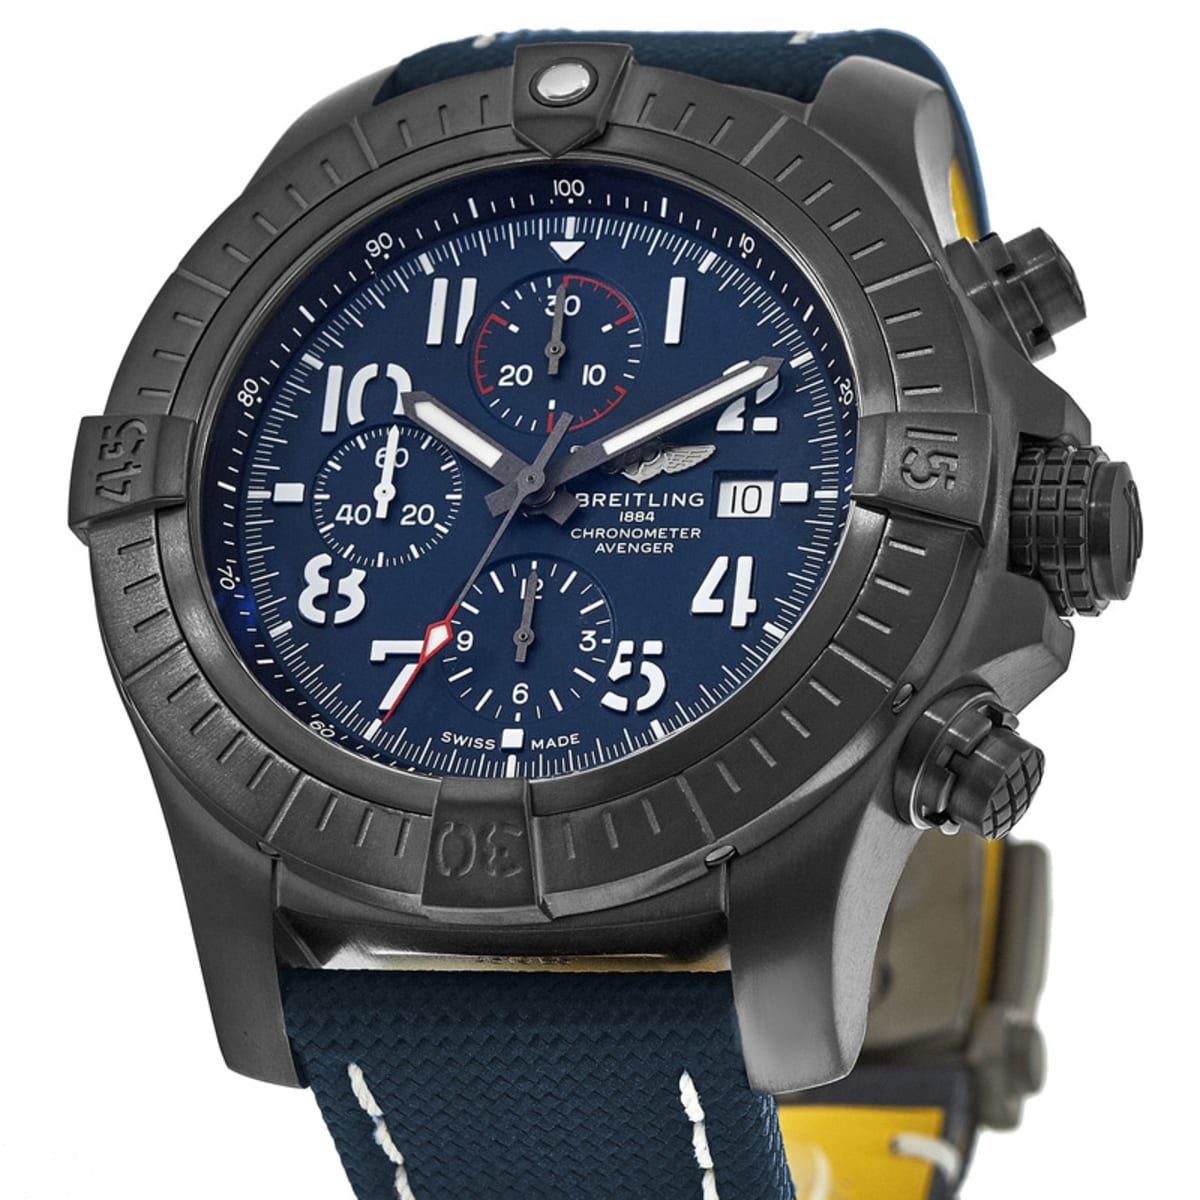 The titanium fake watch has blue strap.